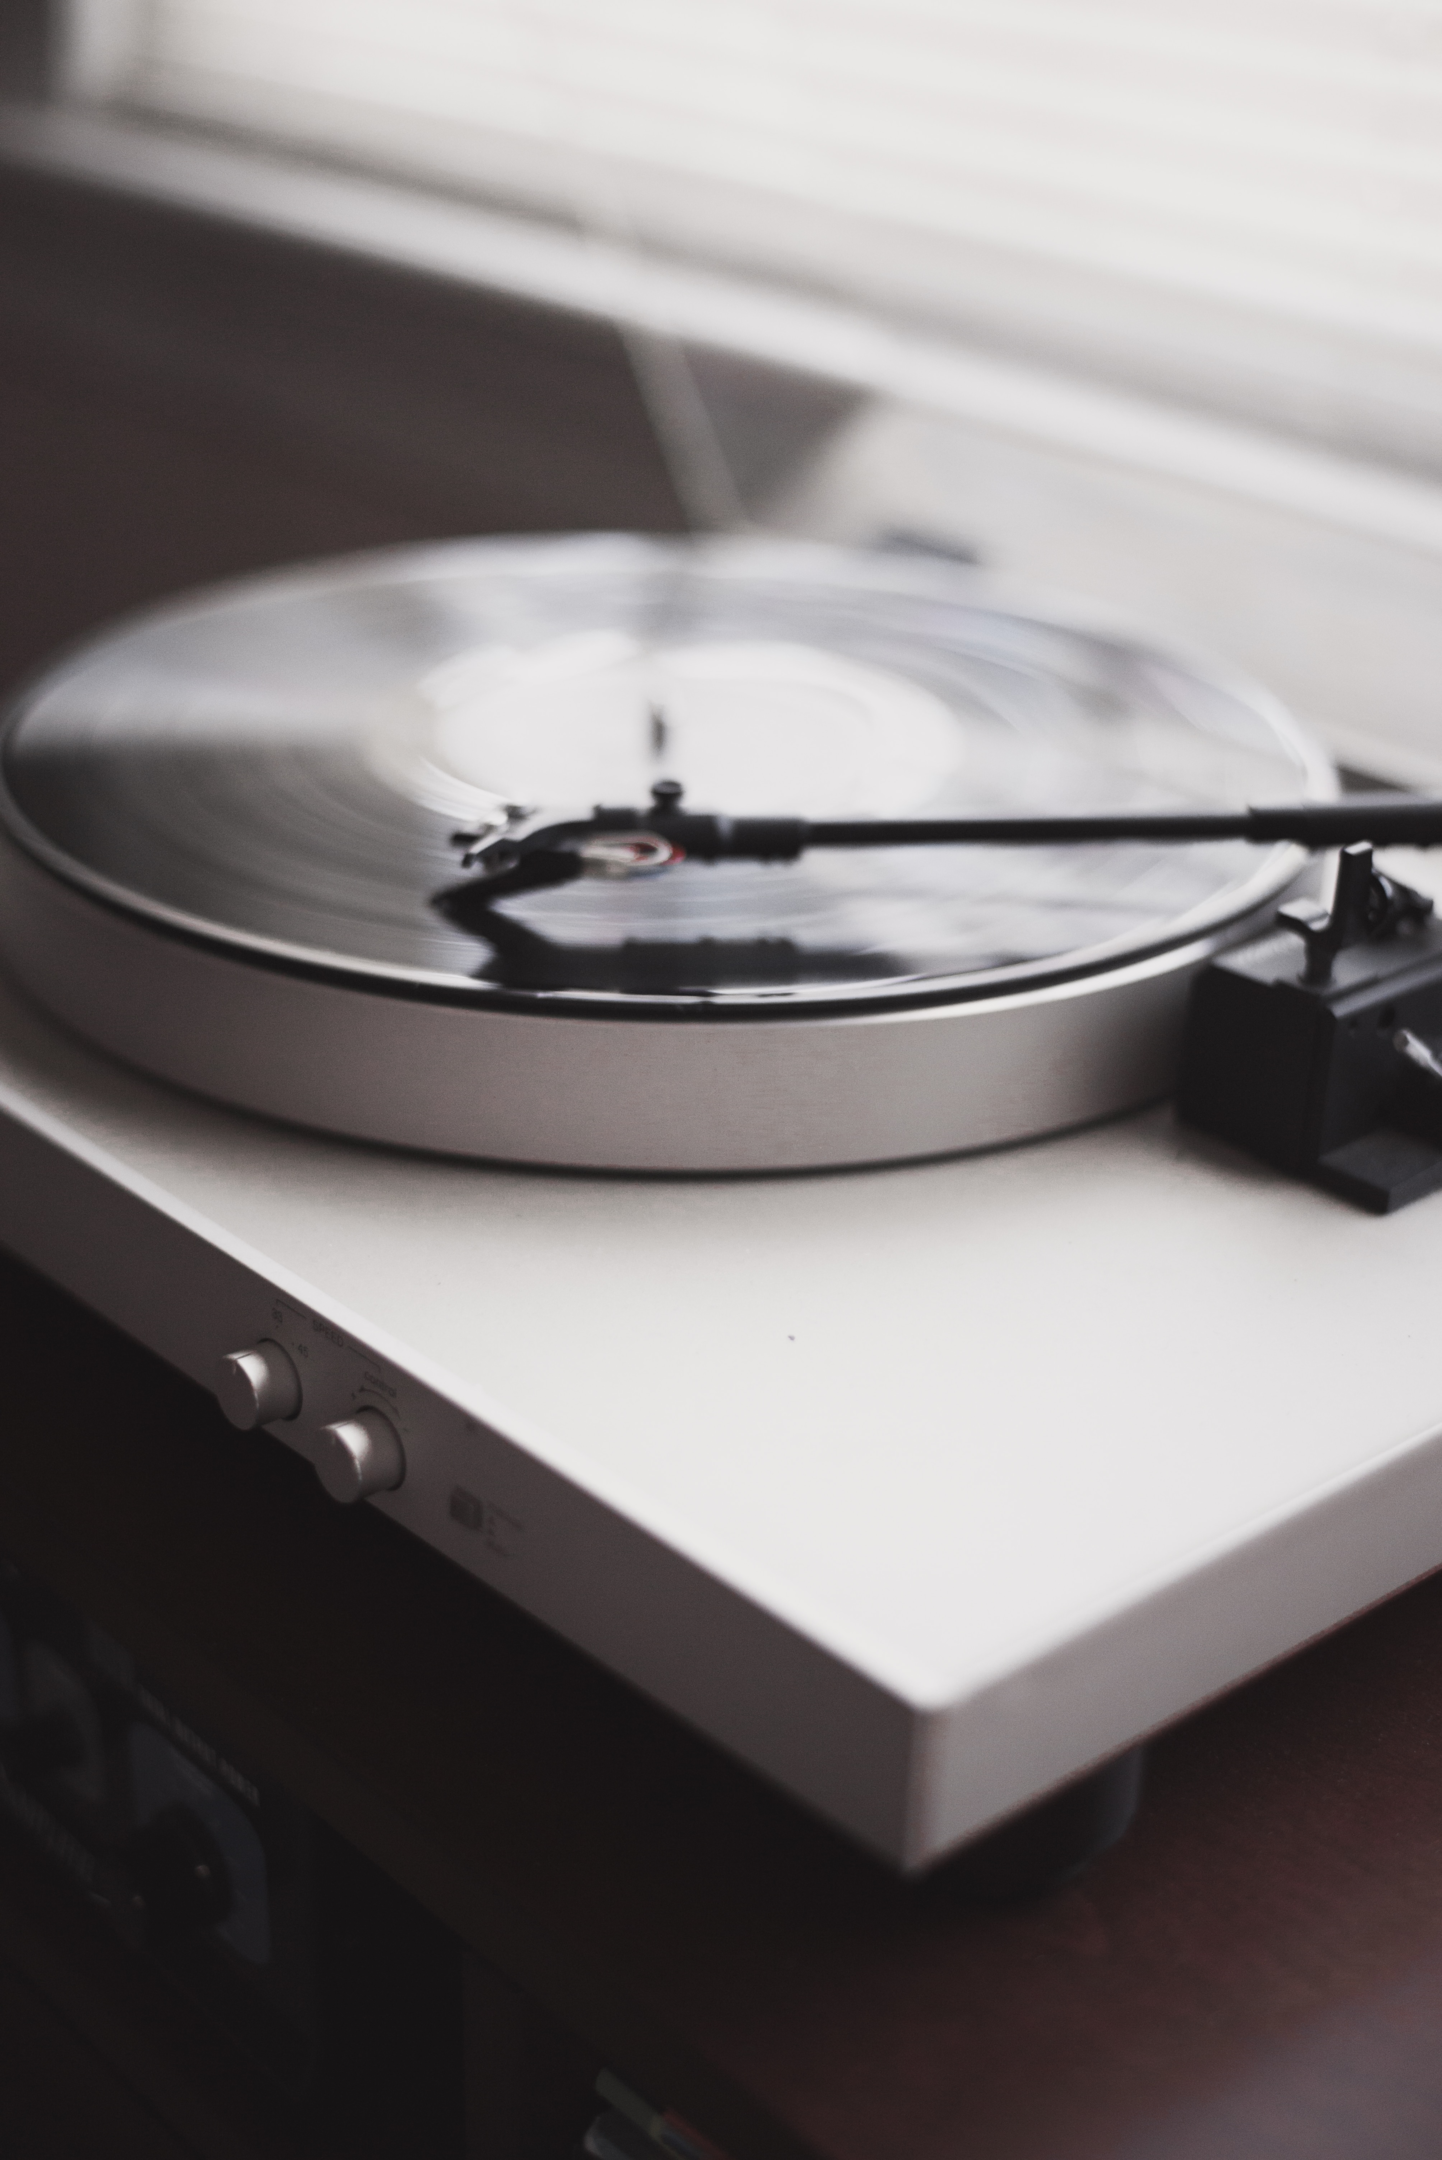 clean your vinyl records